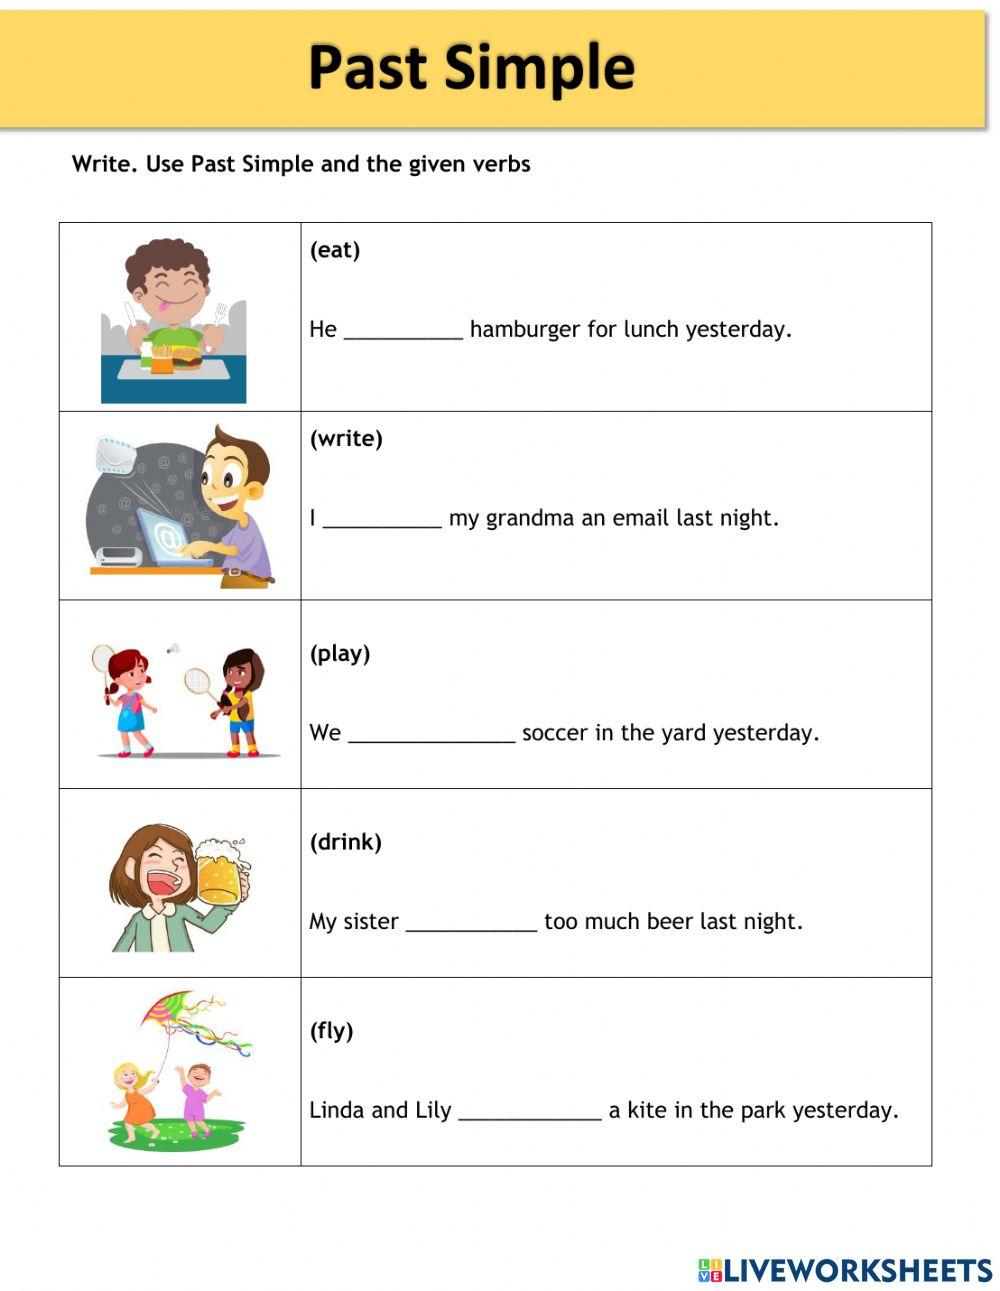 Verbs - Past Simple interactive worksheet | Live Worksheets